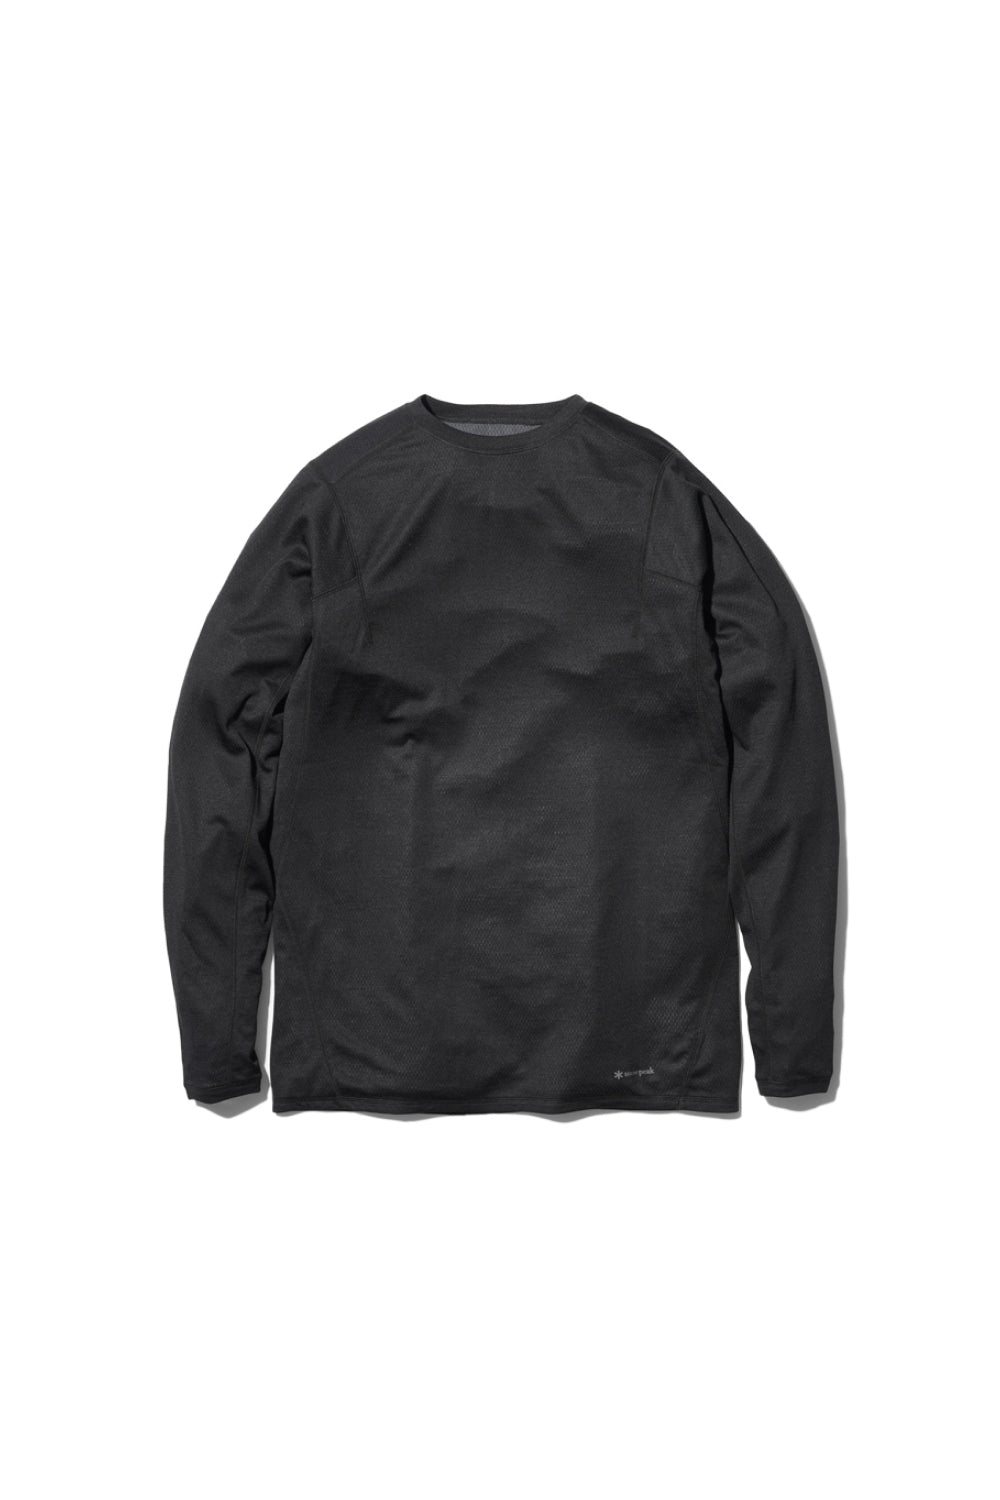 Snow Peak Recycled Polyester Wool Longsleeve T-Shirt - Black | Coffee Outdoors